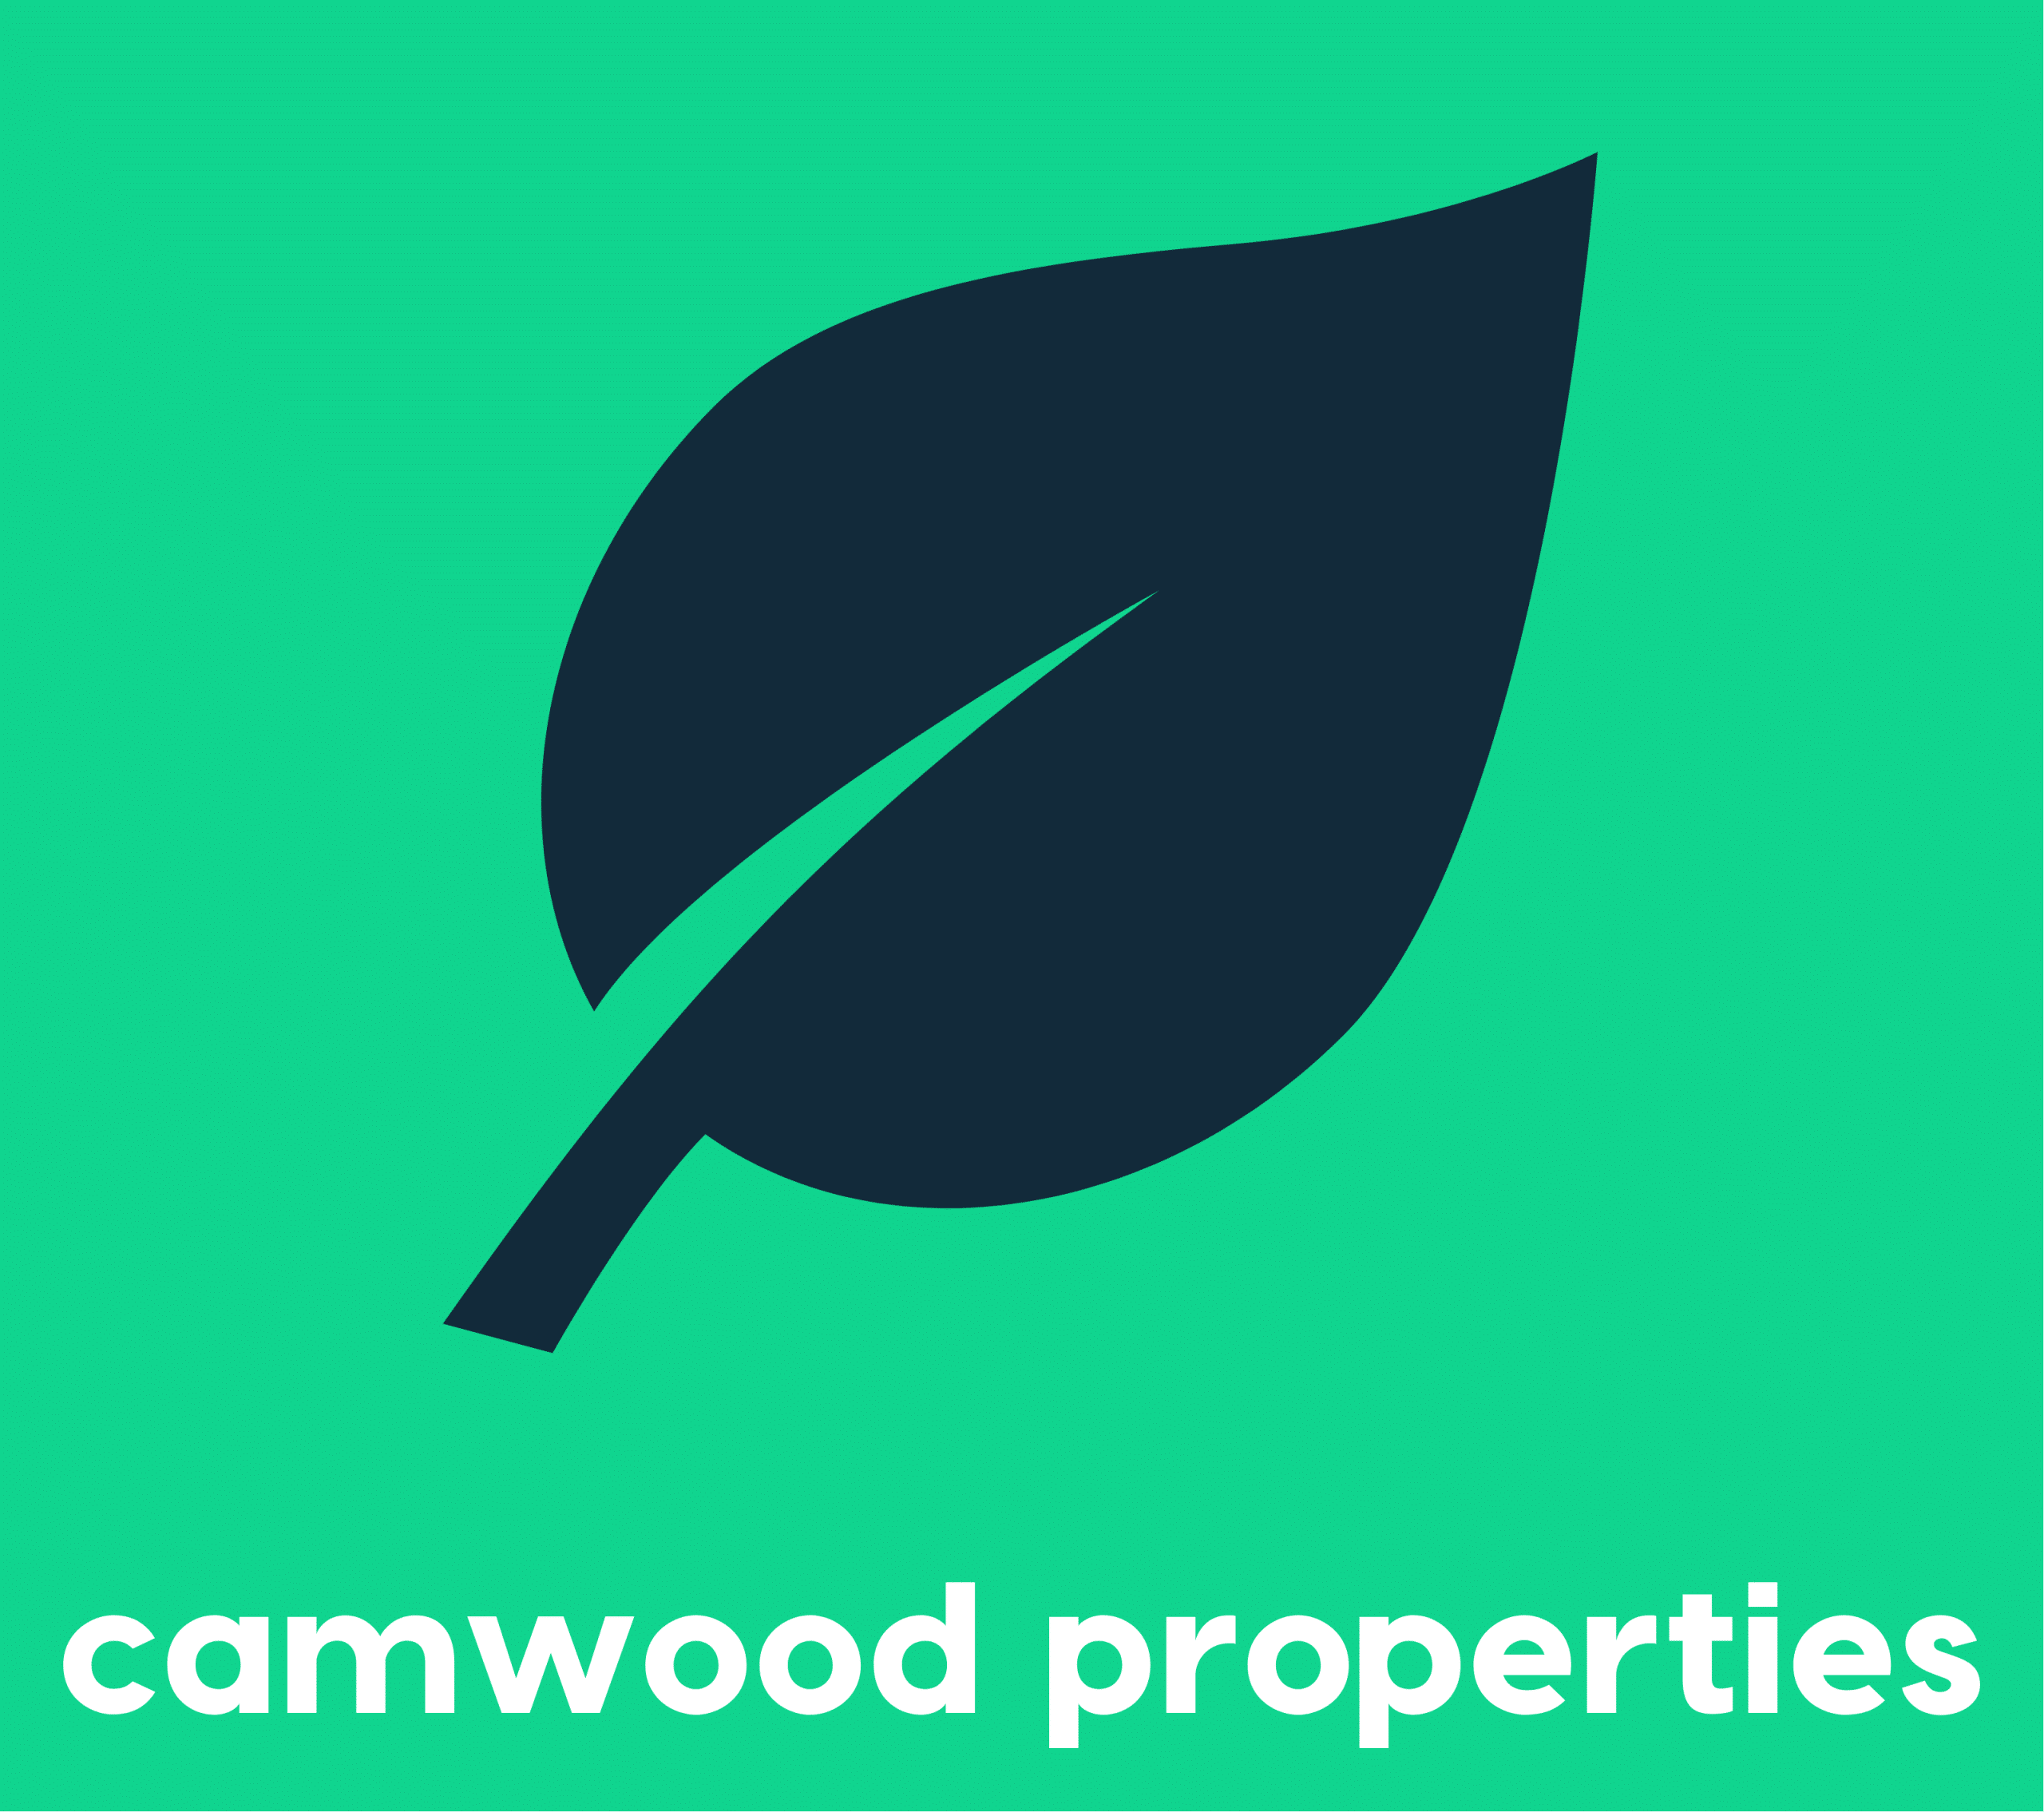 Camwood House Buyers